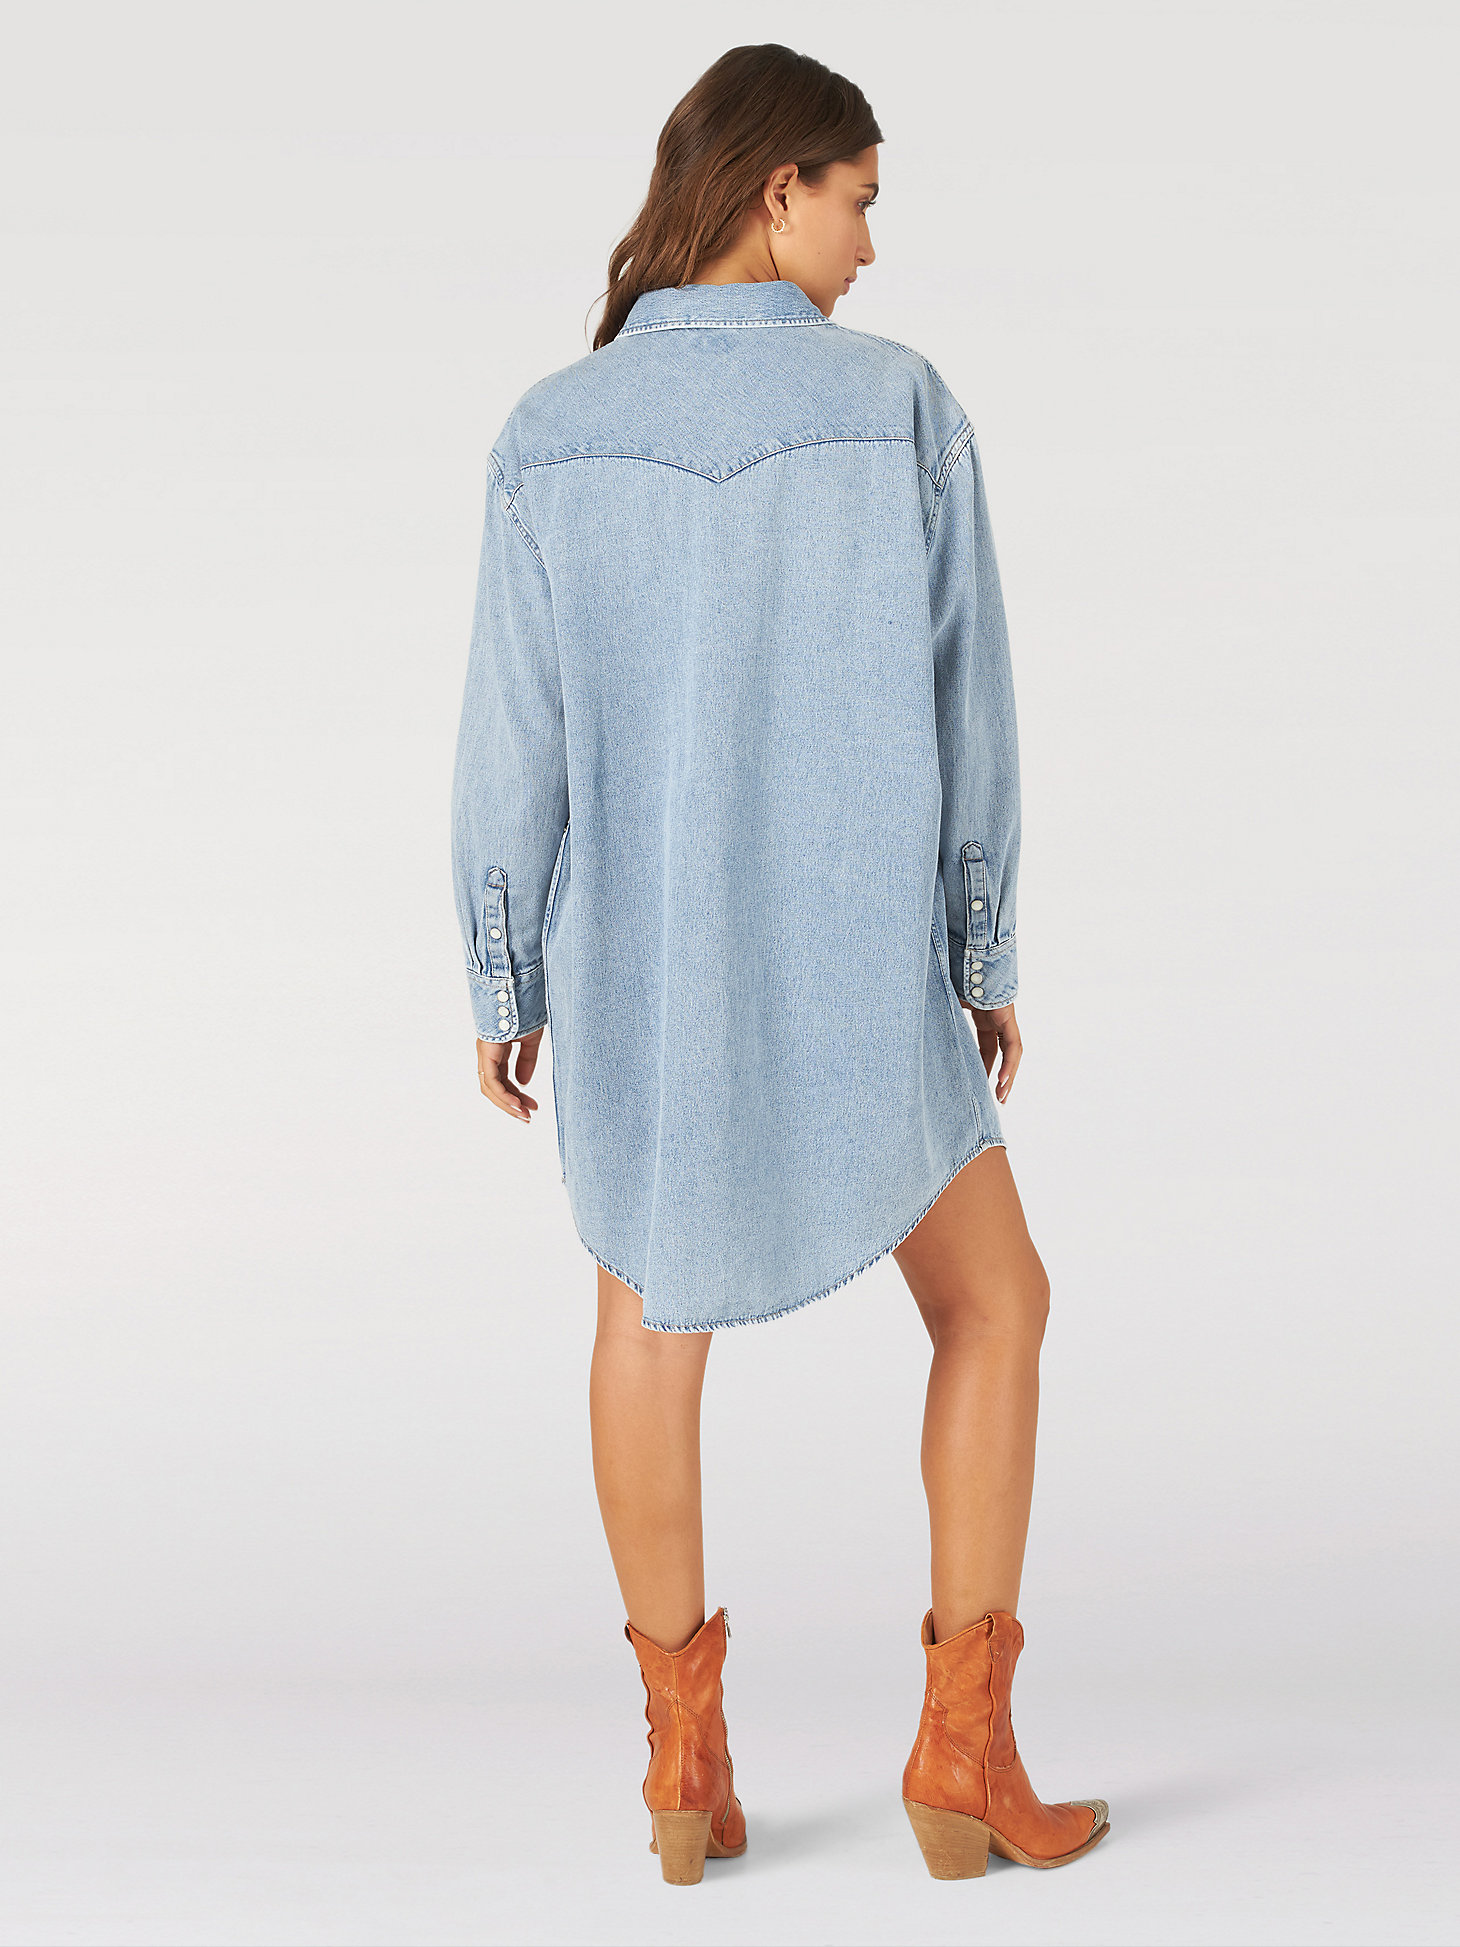 Women's Wrangler® Denim Shirtdress in Light Shade alternative view 1